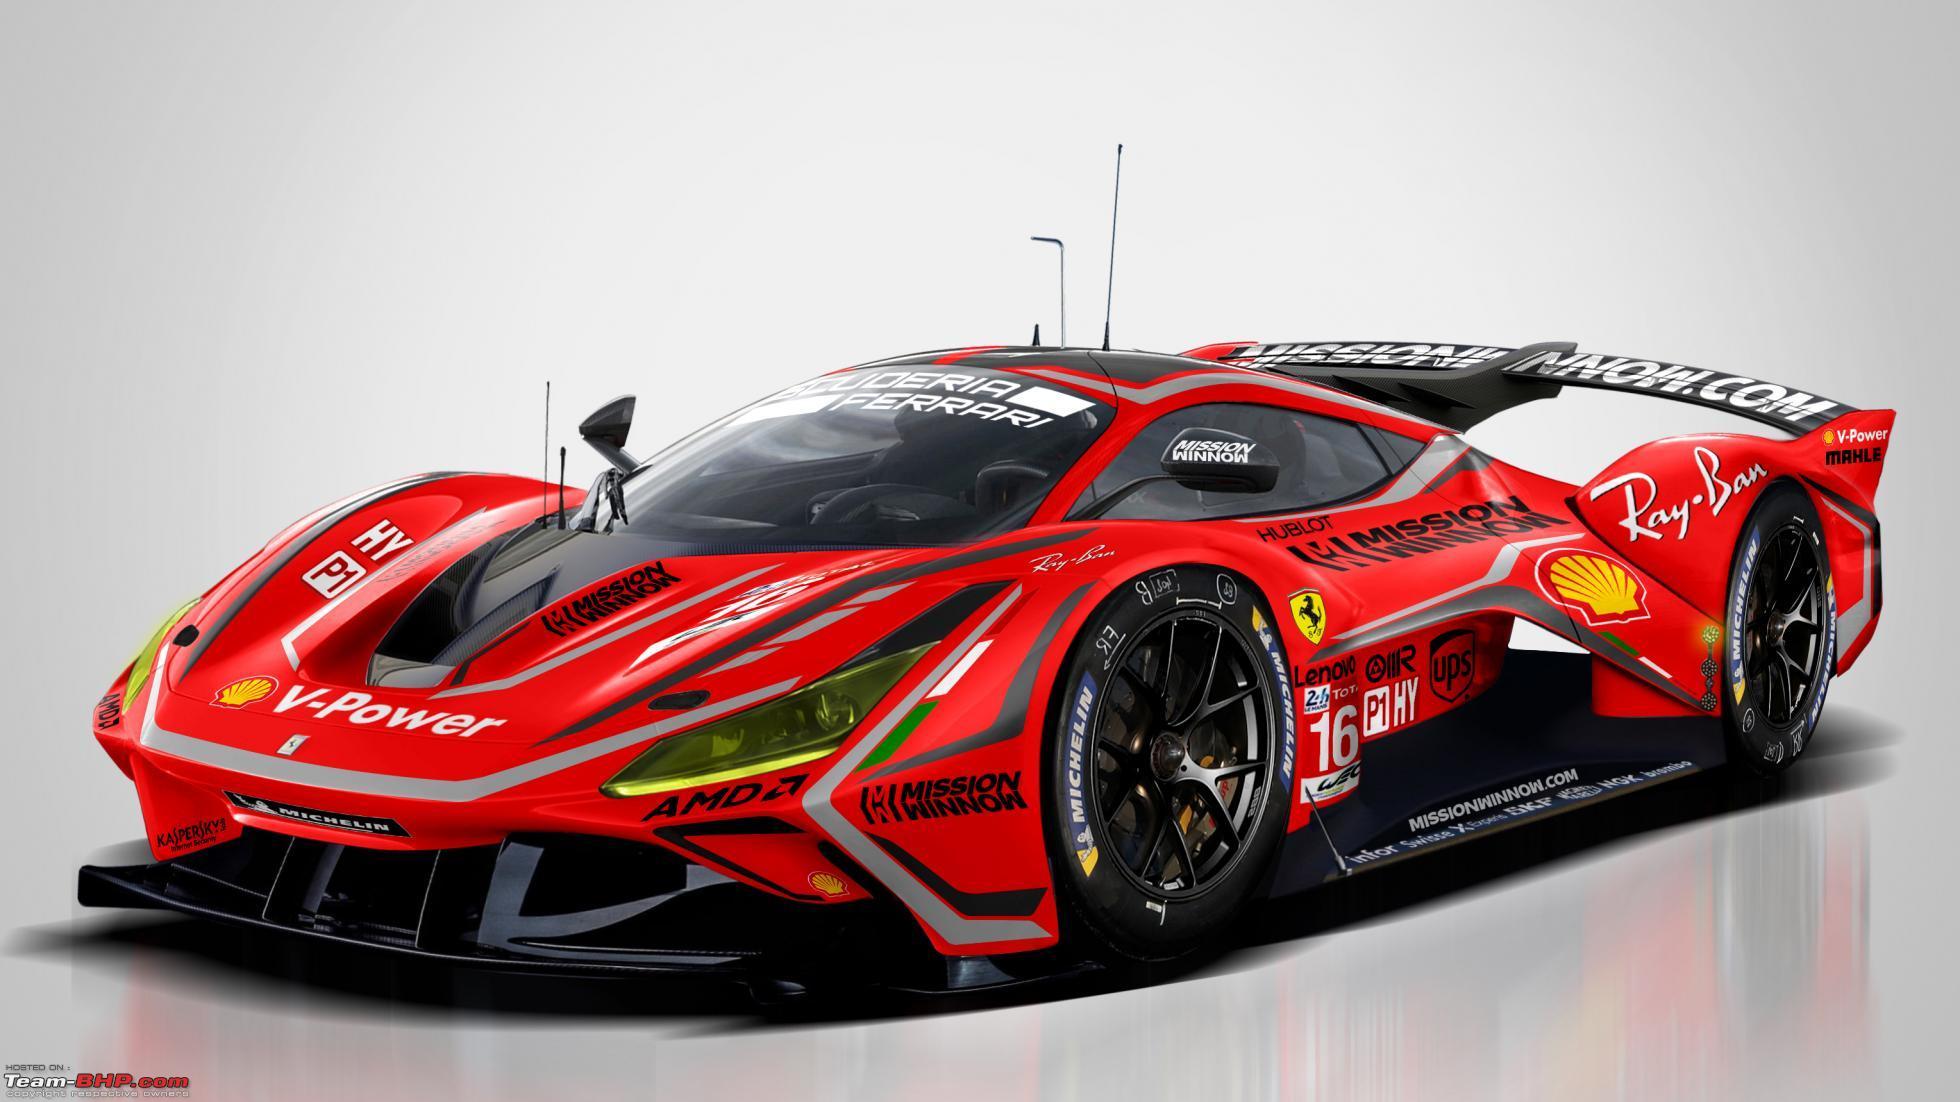 Ferrari will return to Le Mans in 2023 with a hypercar TeamBHP